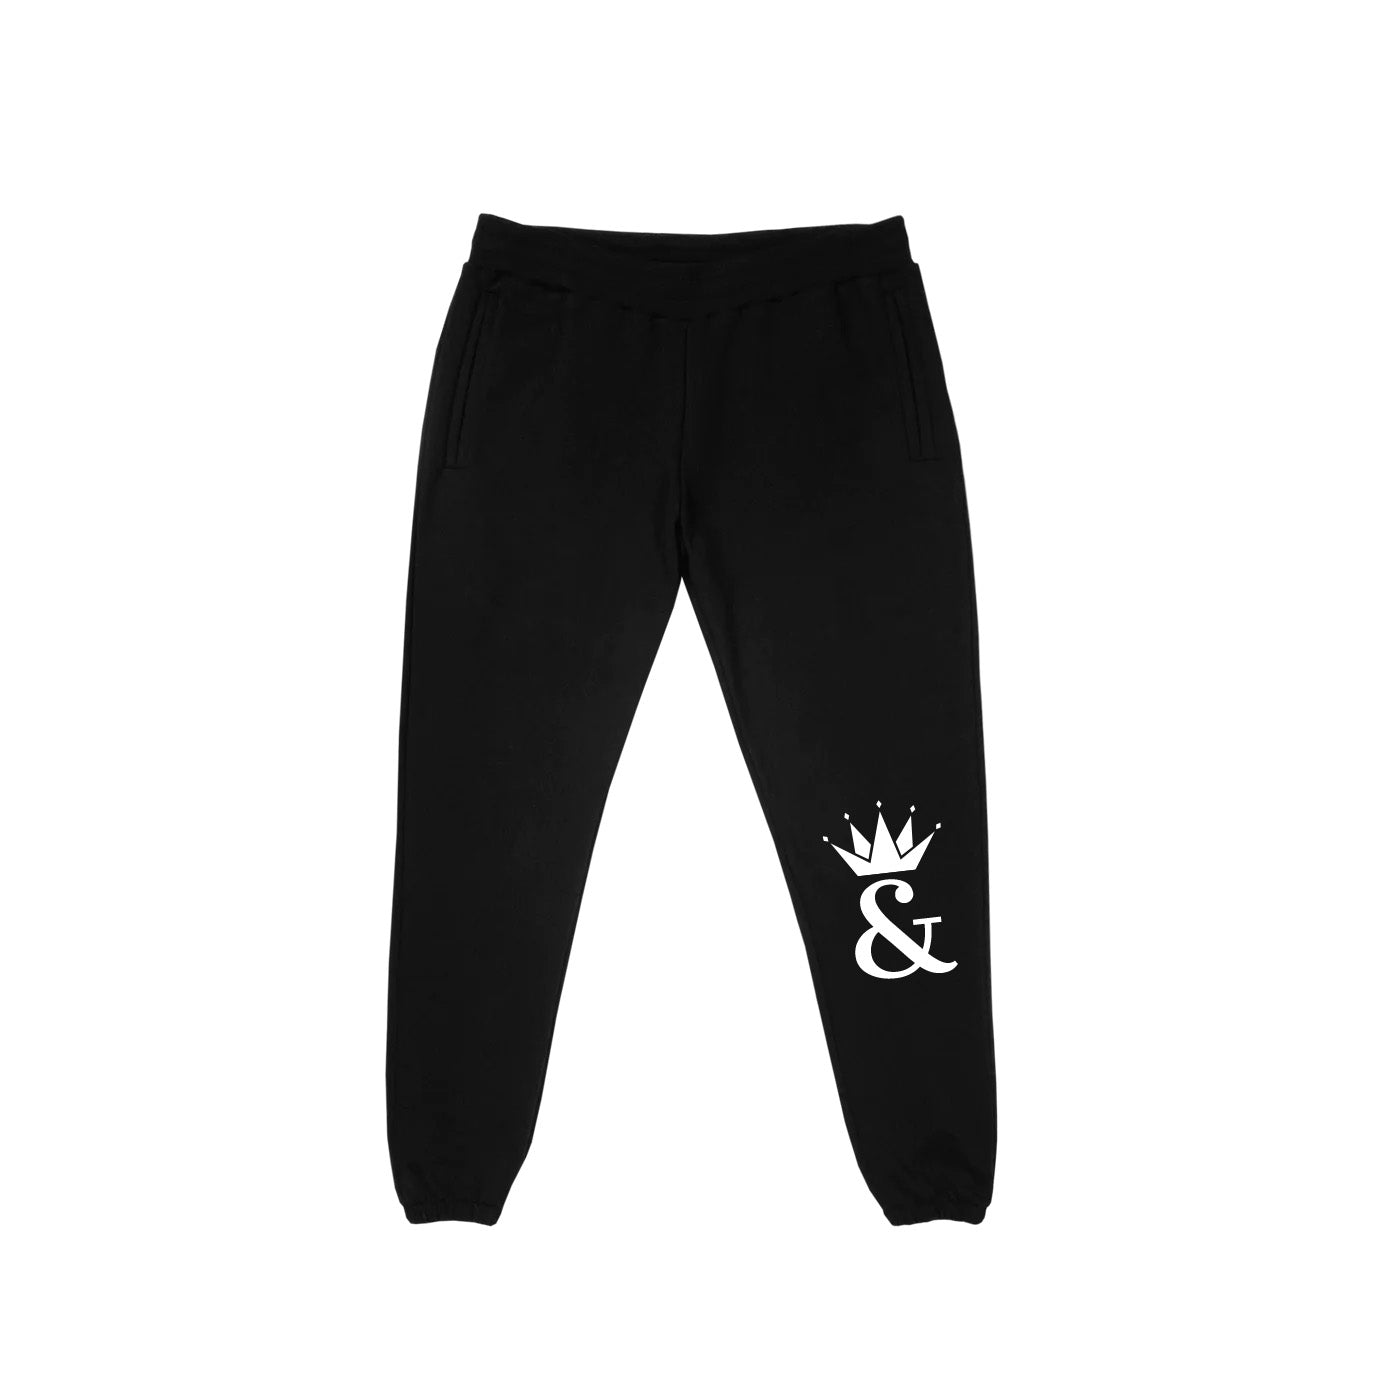 & Crown Sweatpants - Black French Terry Pants